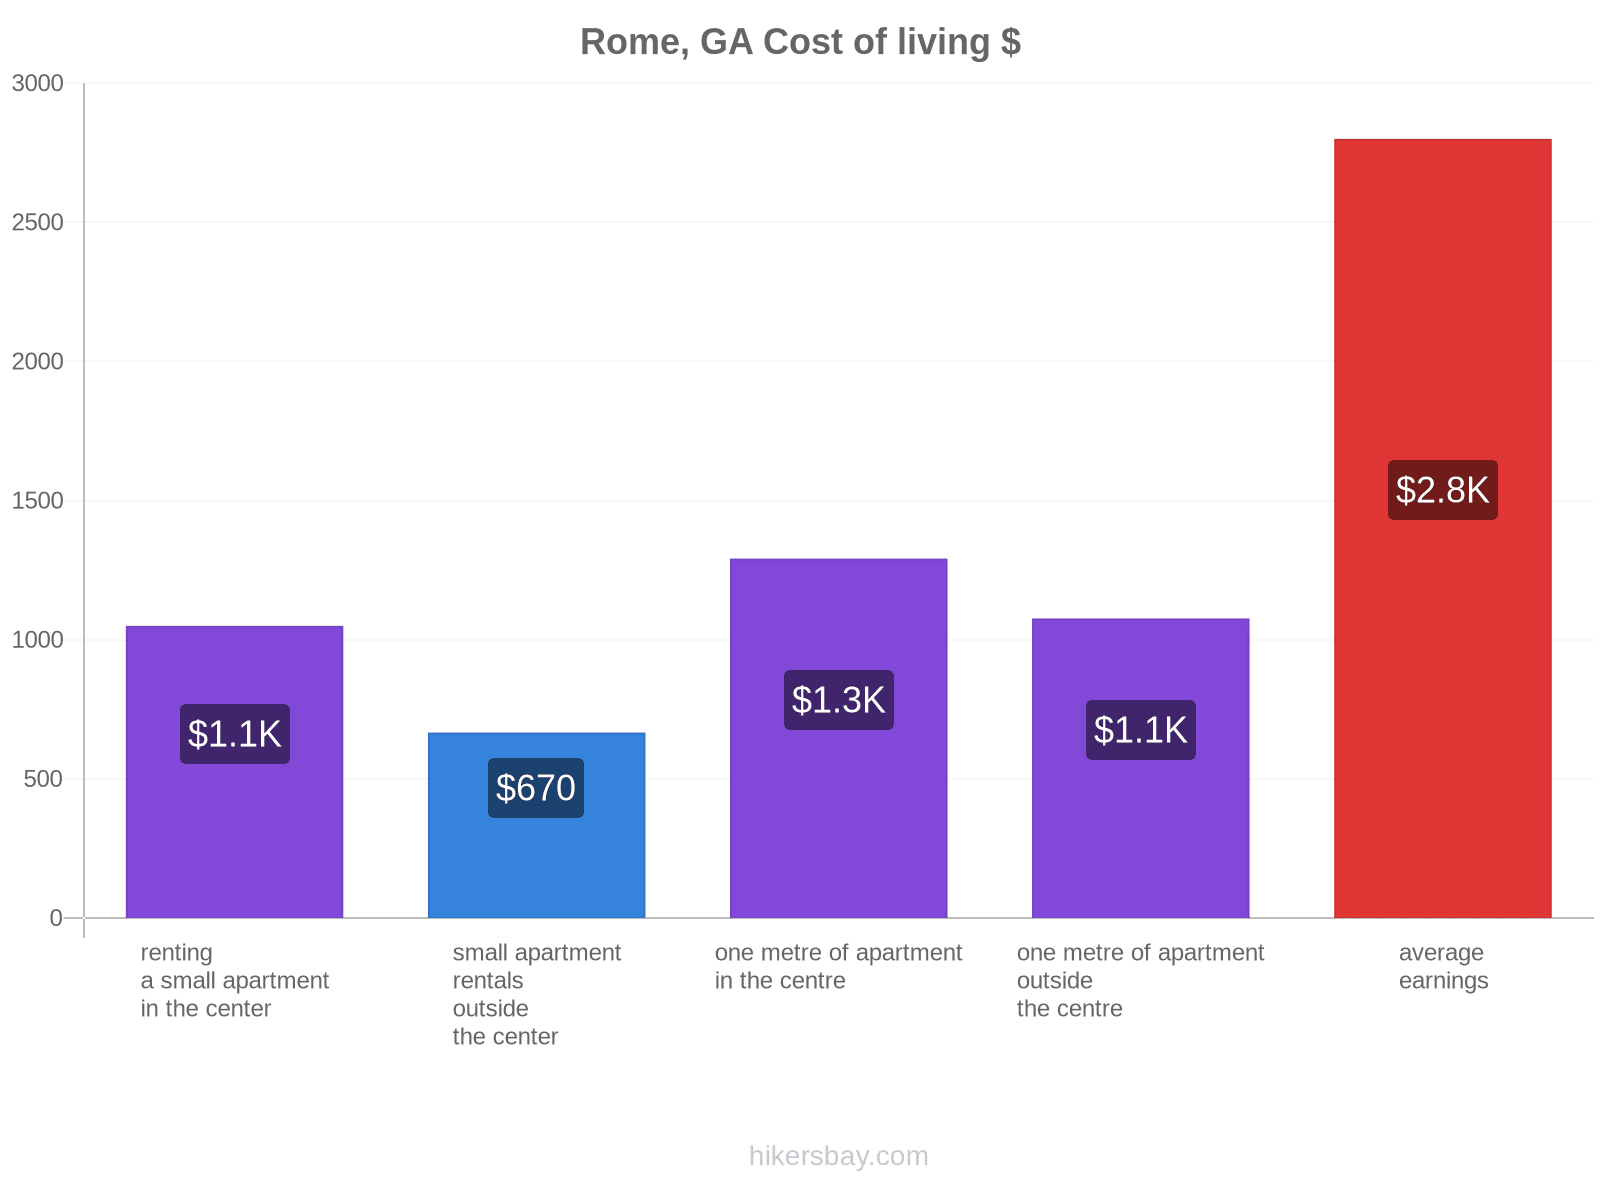 Rome, GA cost of living hikersbay.com